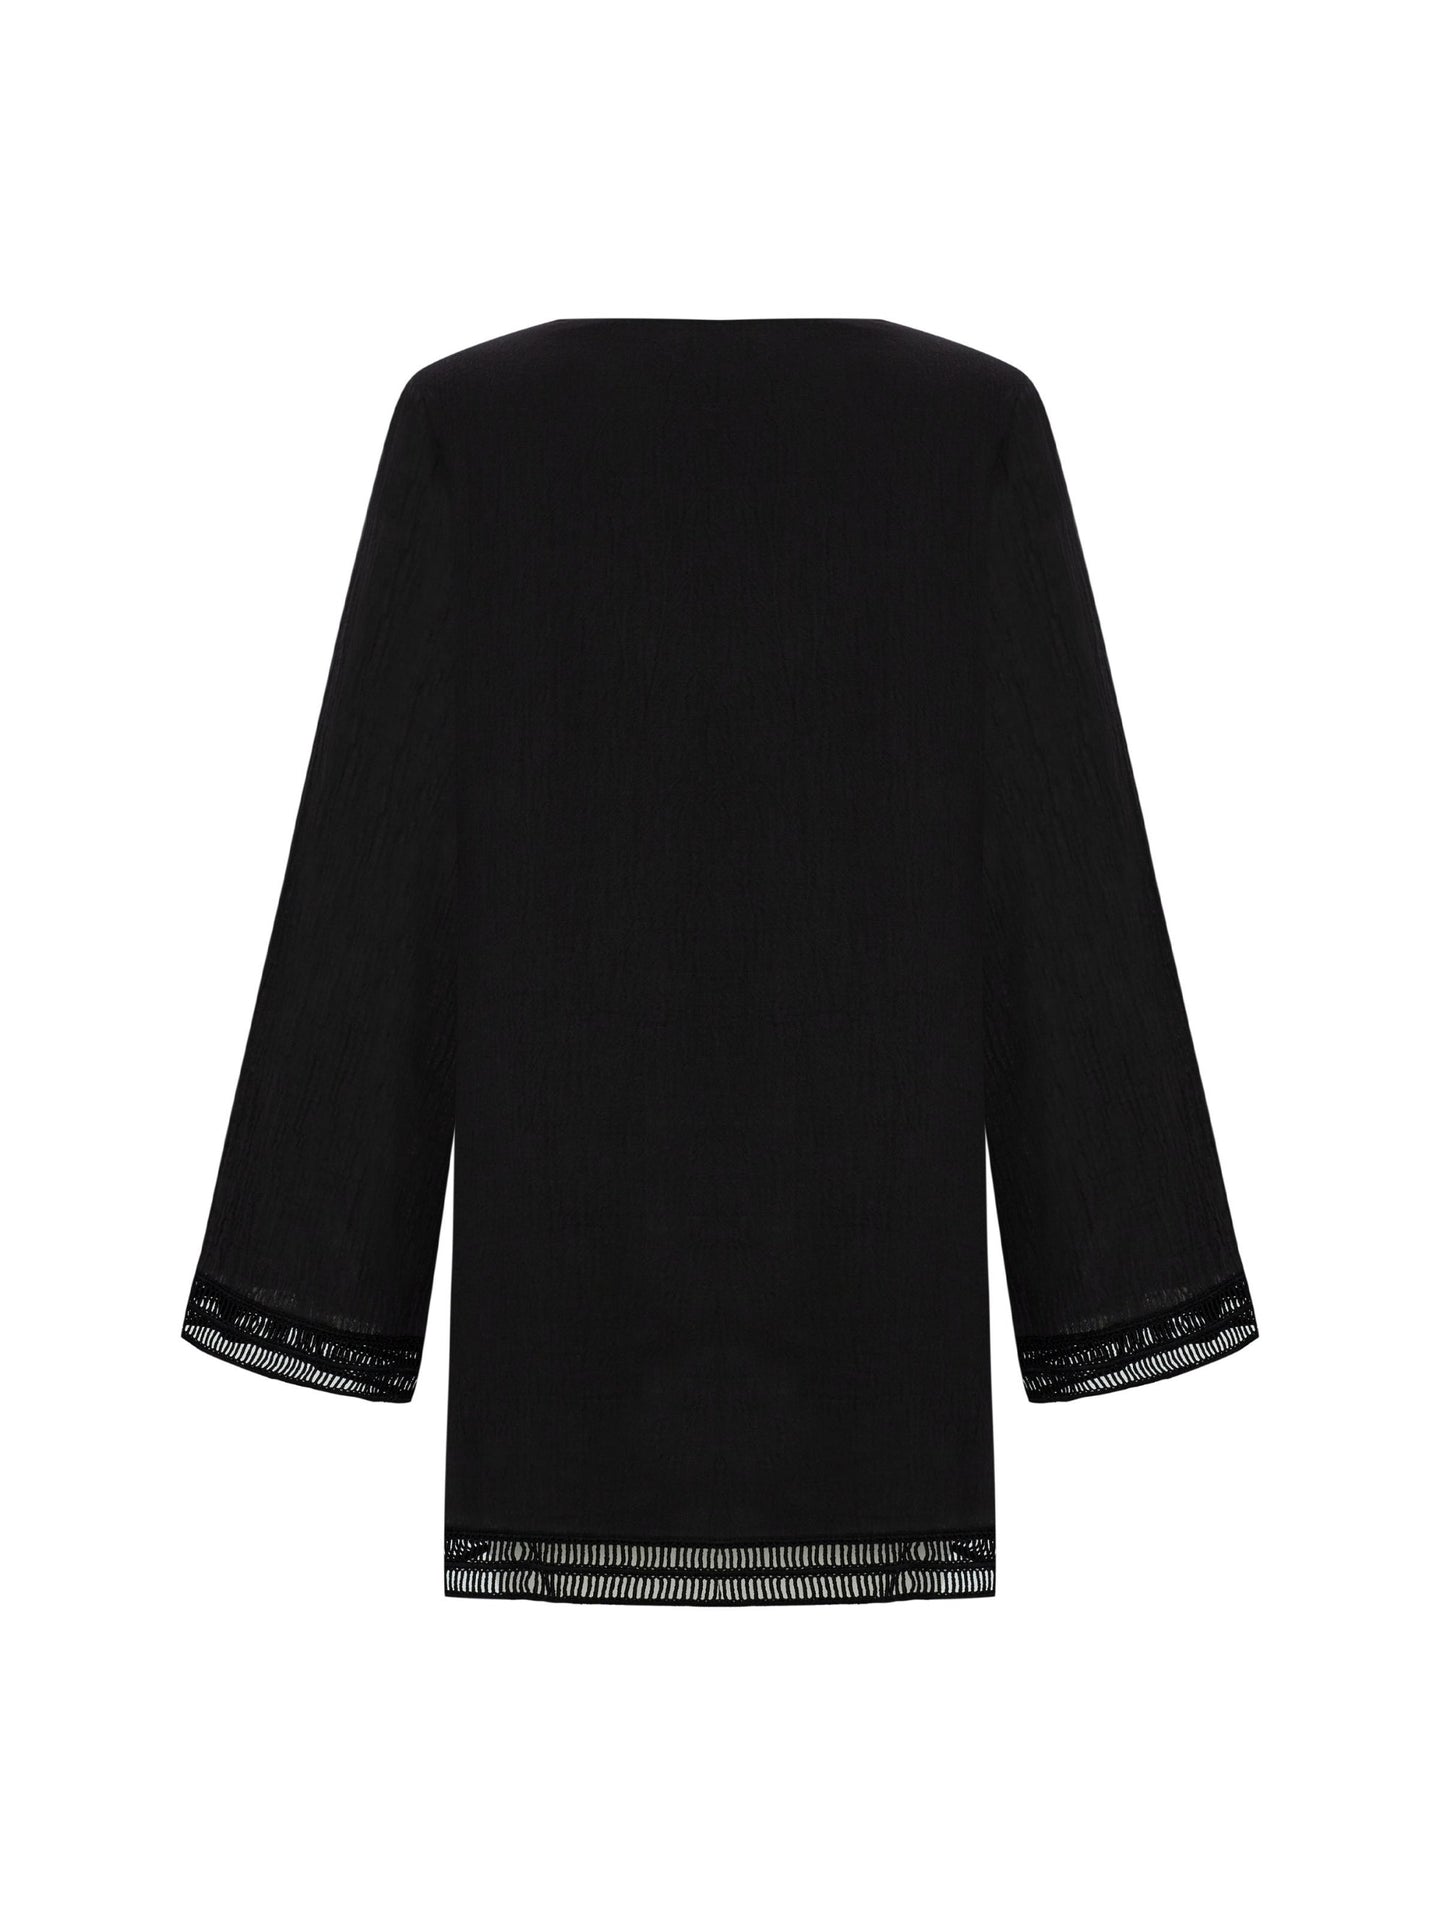 Positano Dress - Black by The Handloom